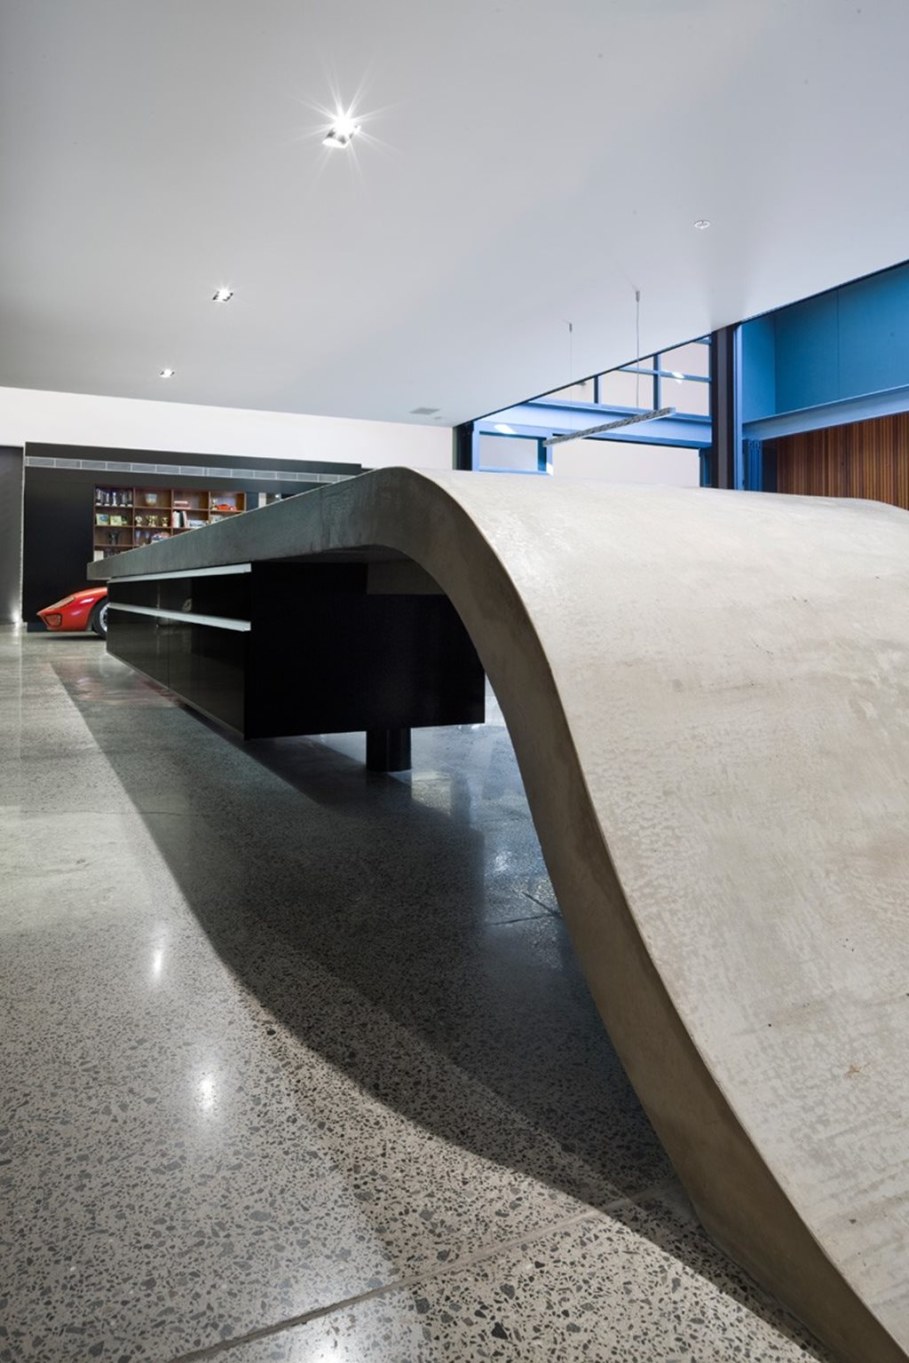 Grand loft house in Australia by Corben Architects studio - Kitchen 4